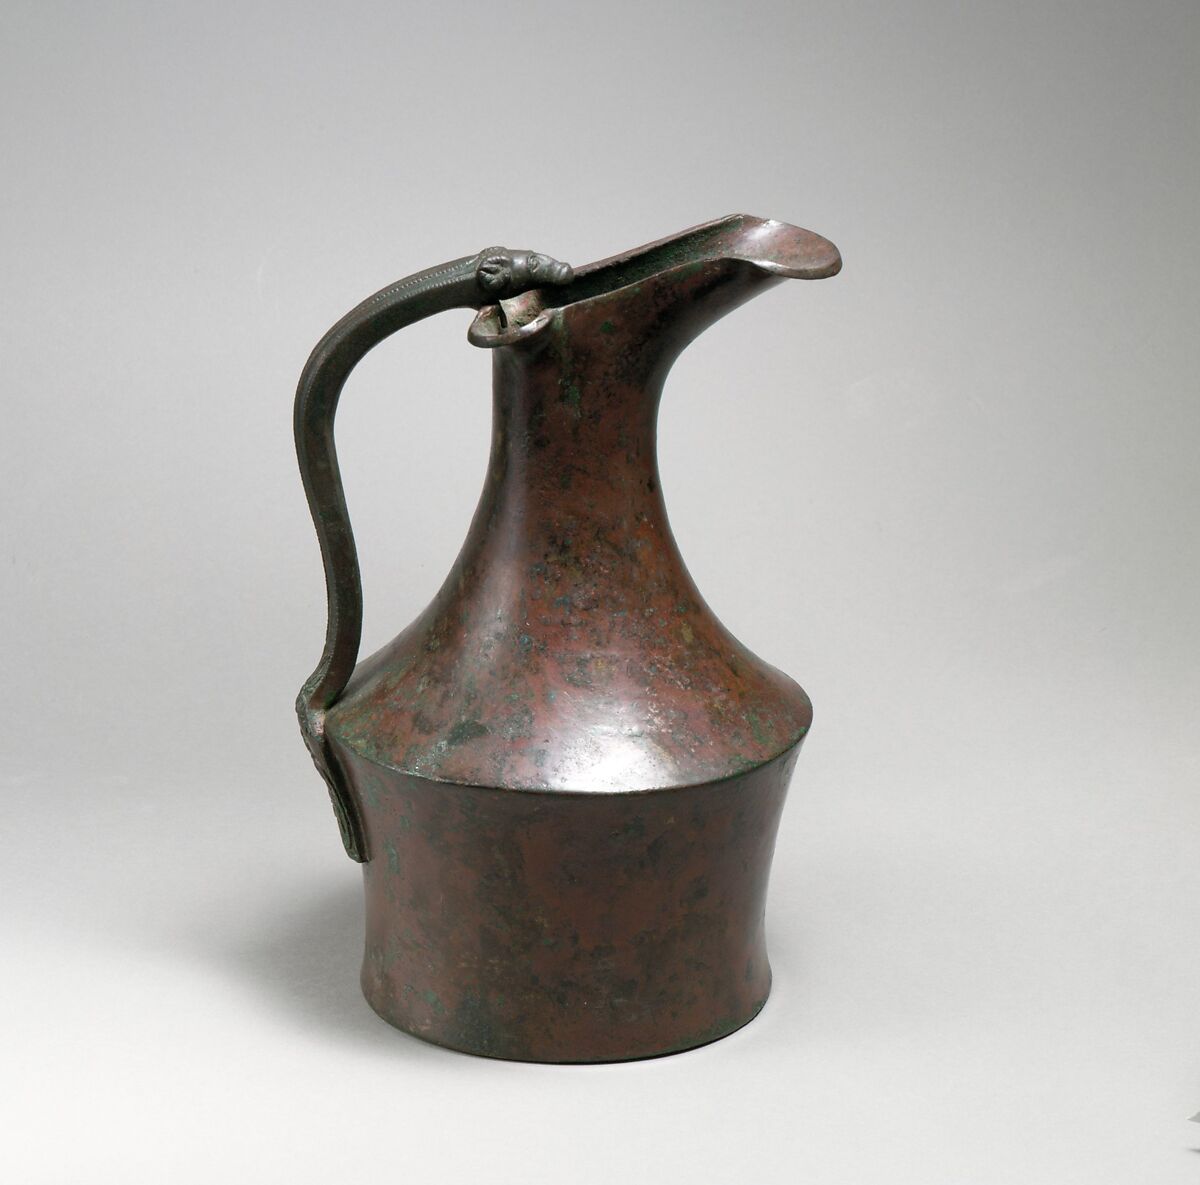 Bronze oinochoe (jug) and handle attachment, Bronze, Etruscan 